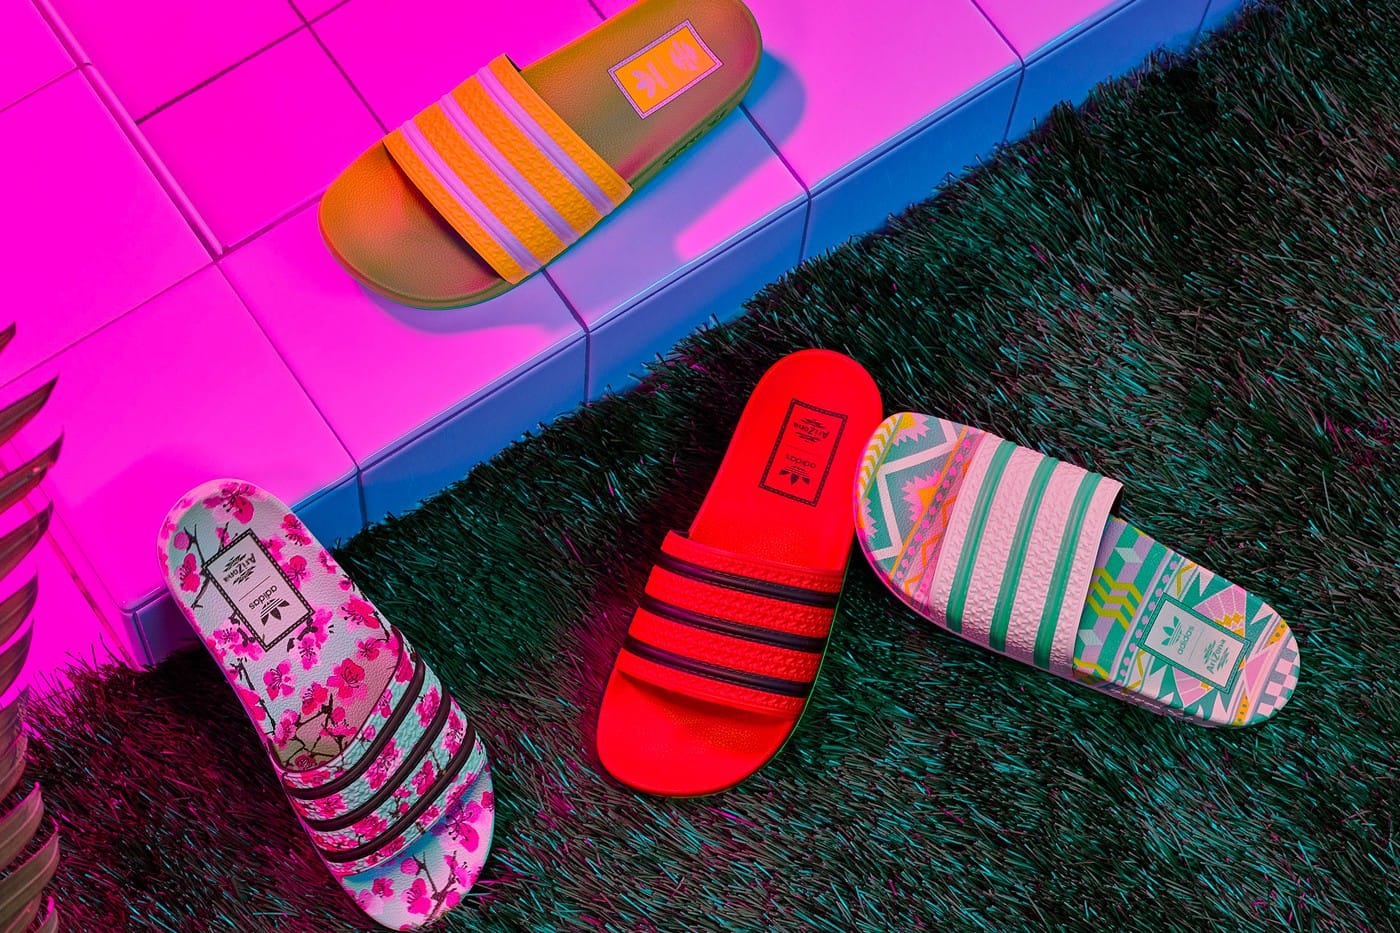 adidas slippers 2019